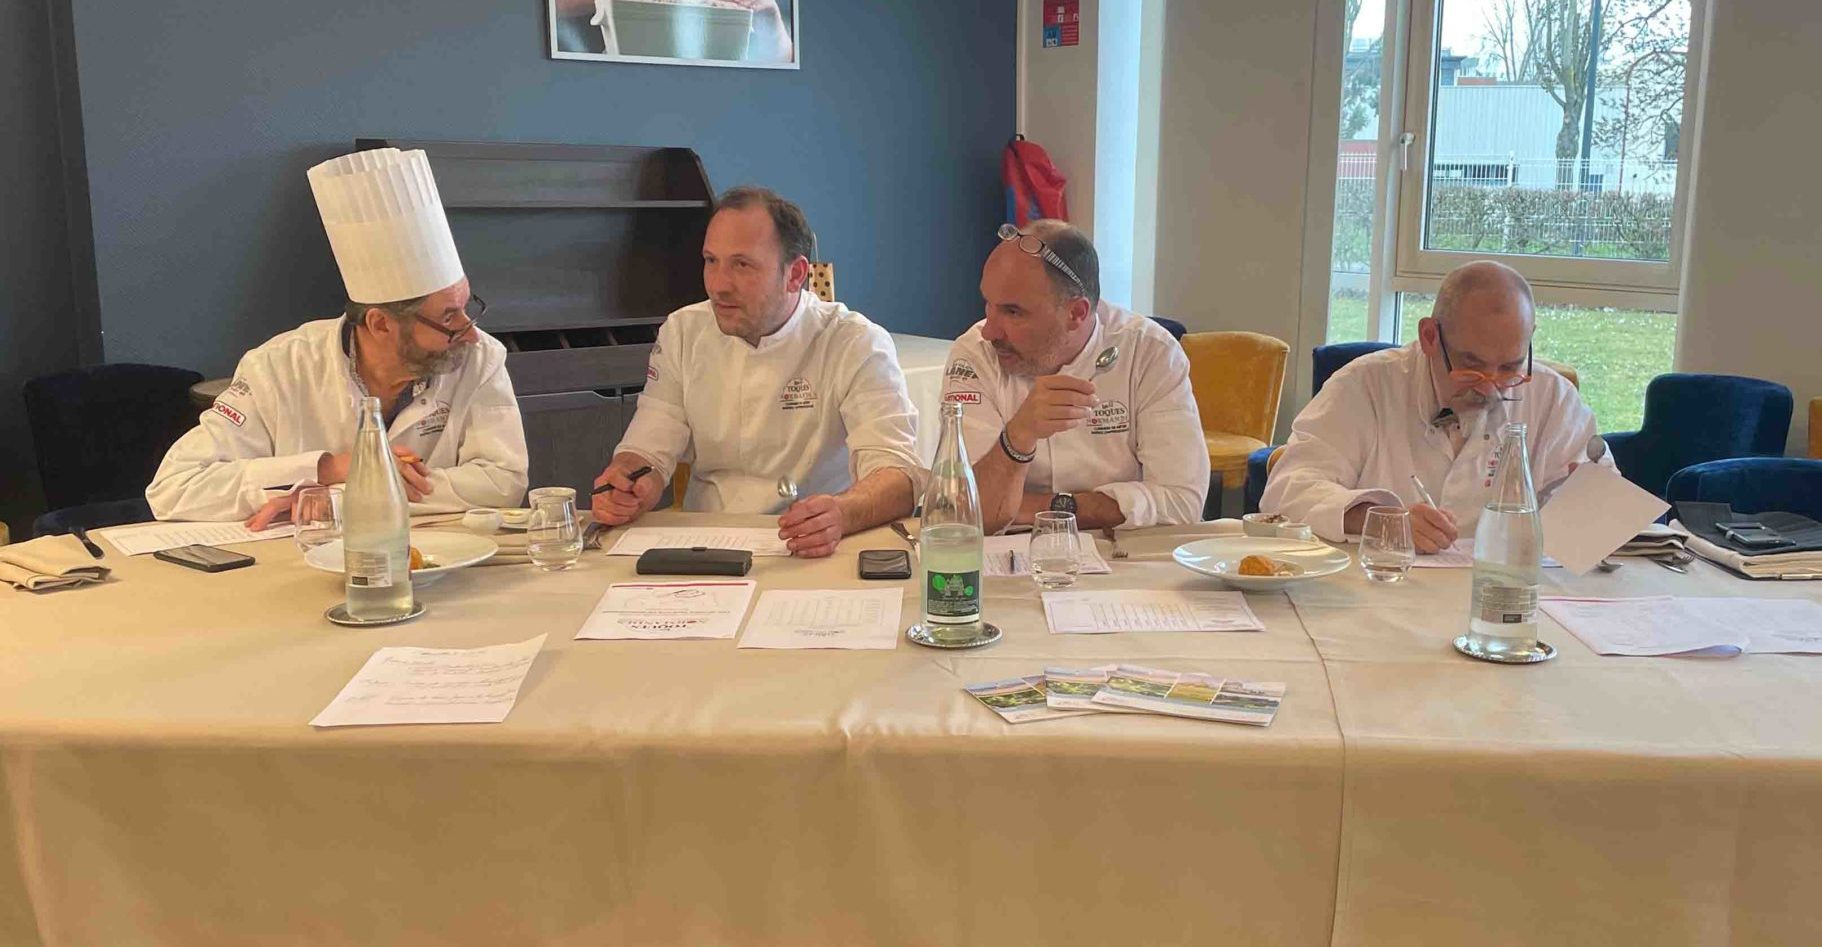 Concours cuisine CFAie - jury degustation